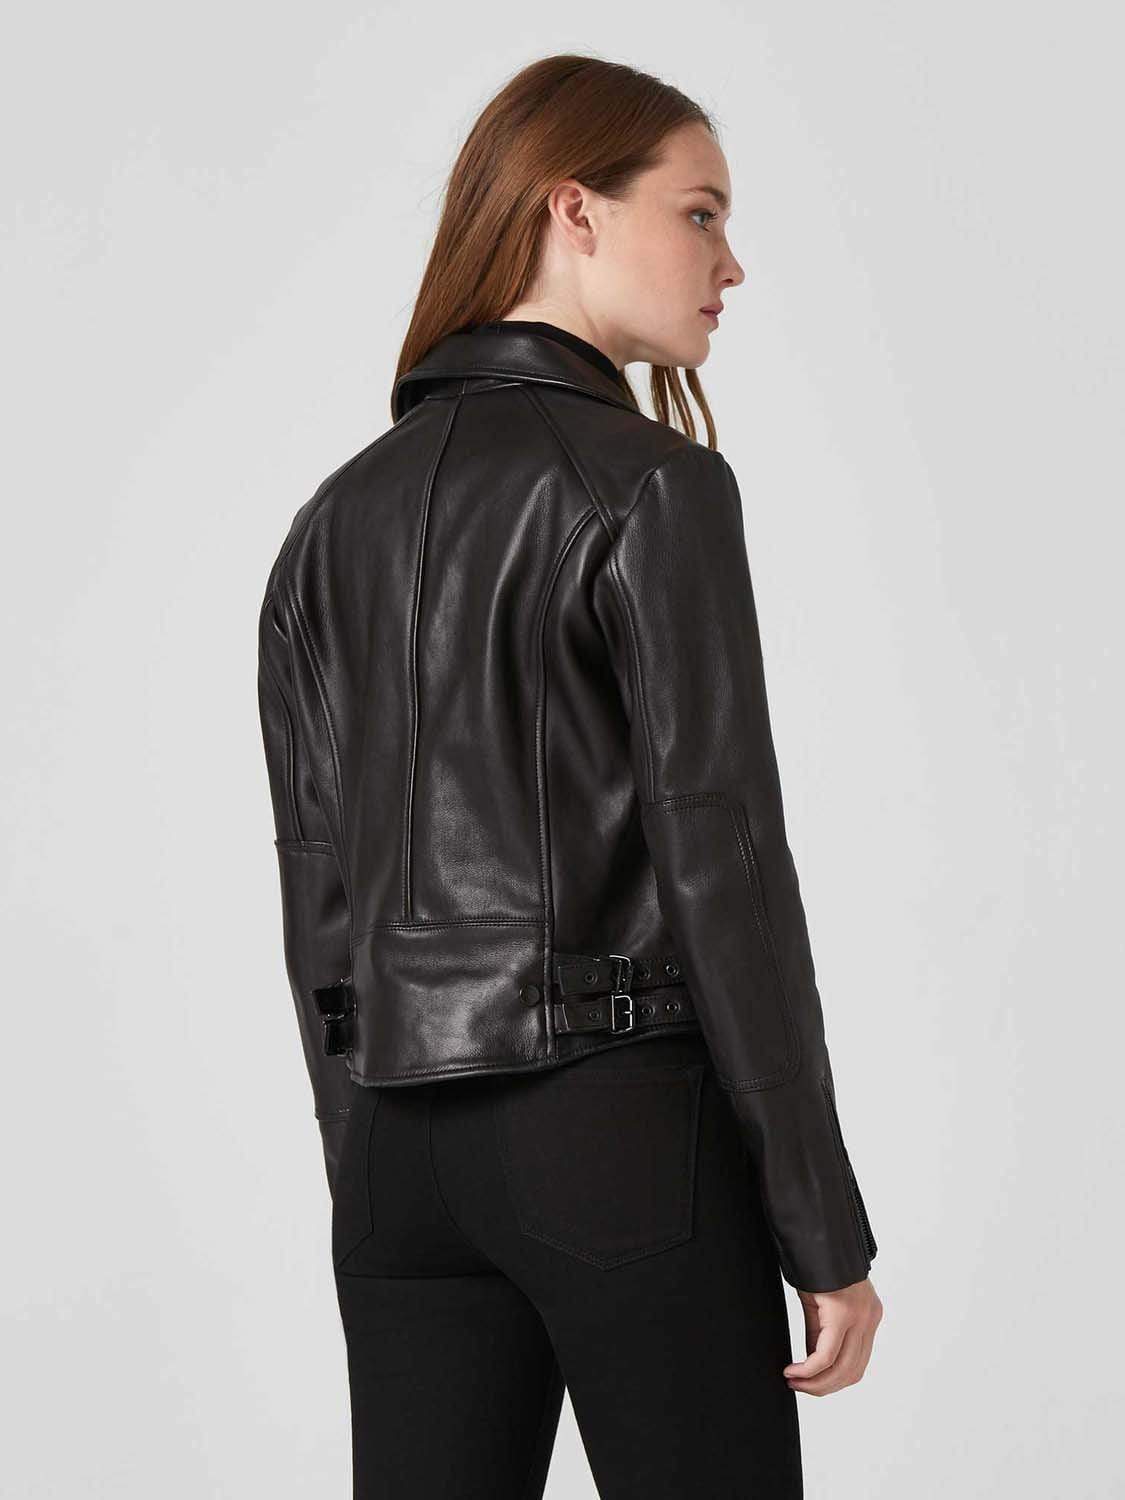 Black Leather Jacket with Lapel Sheepksin Jacket for Her